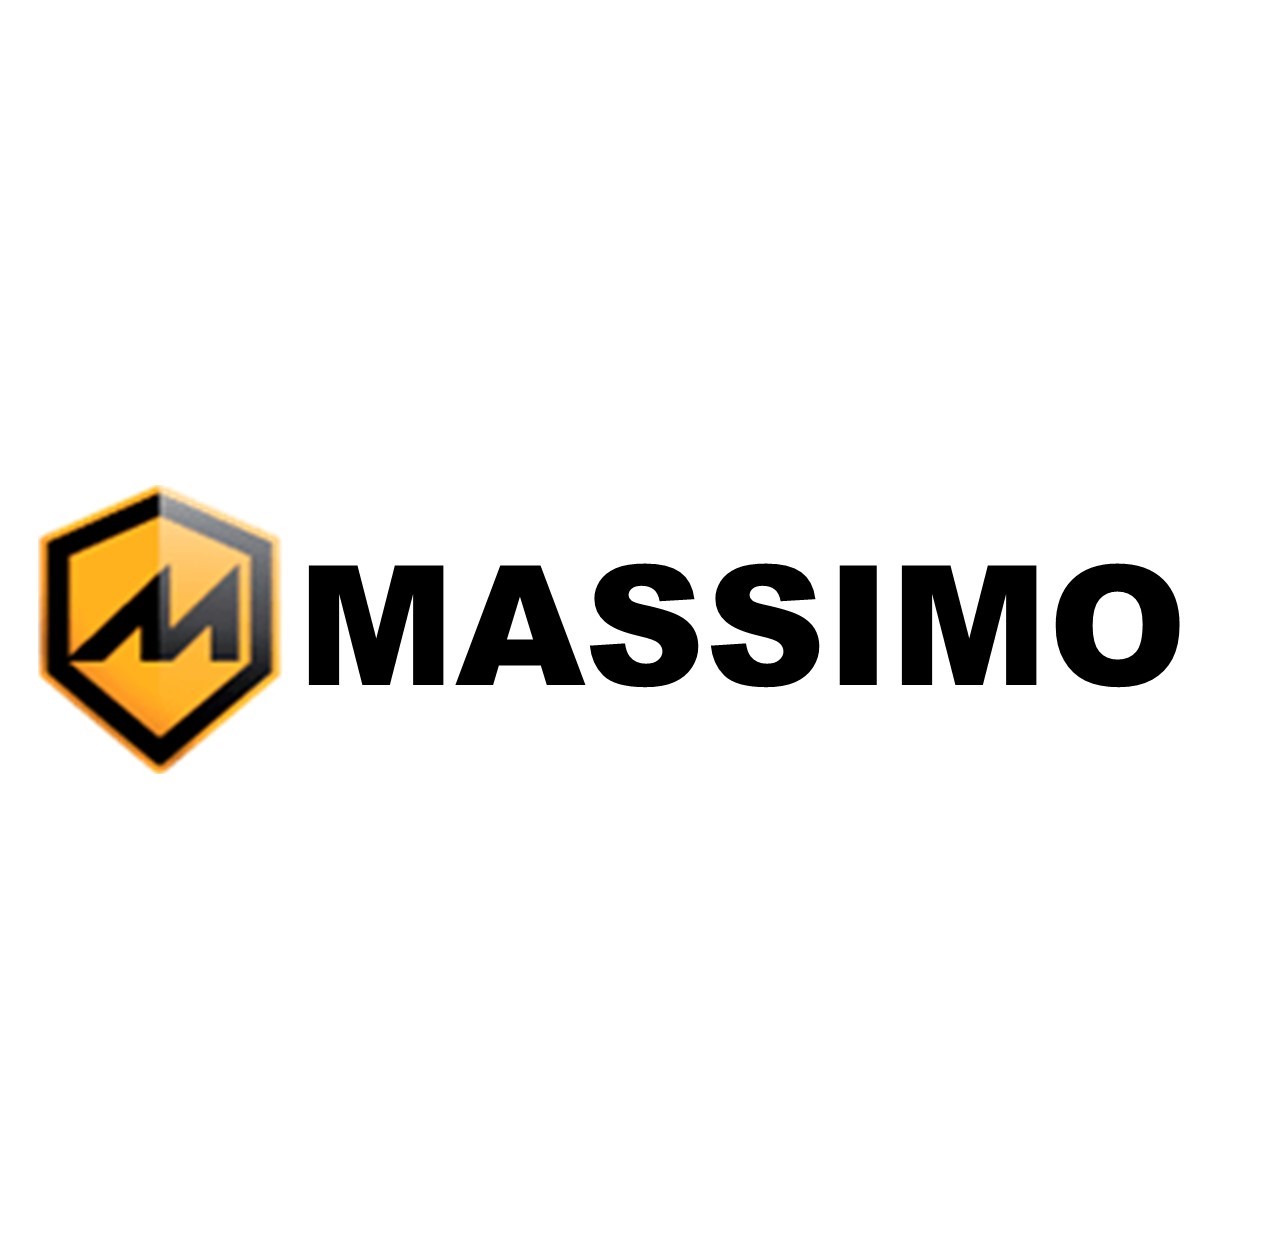 Massimo Motorsports